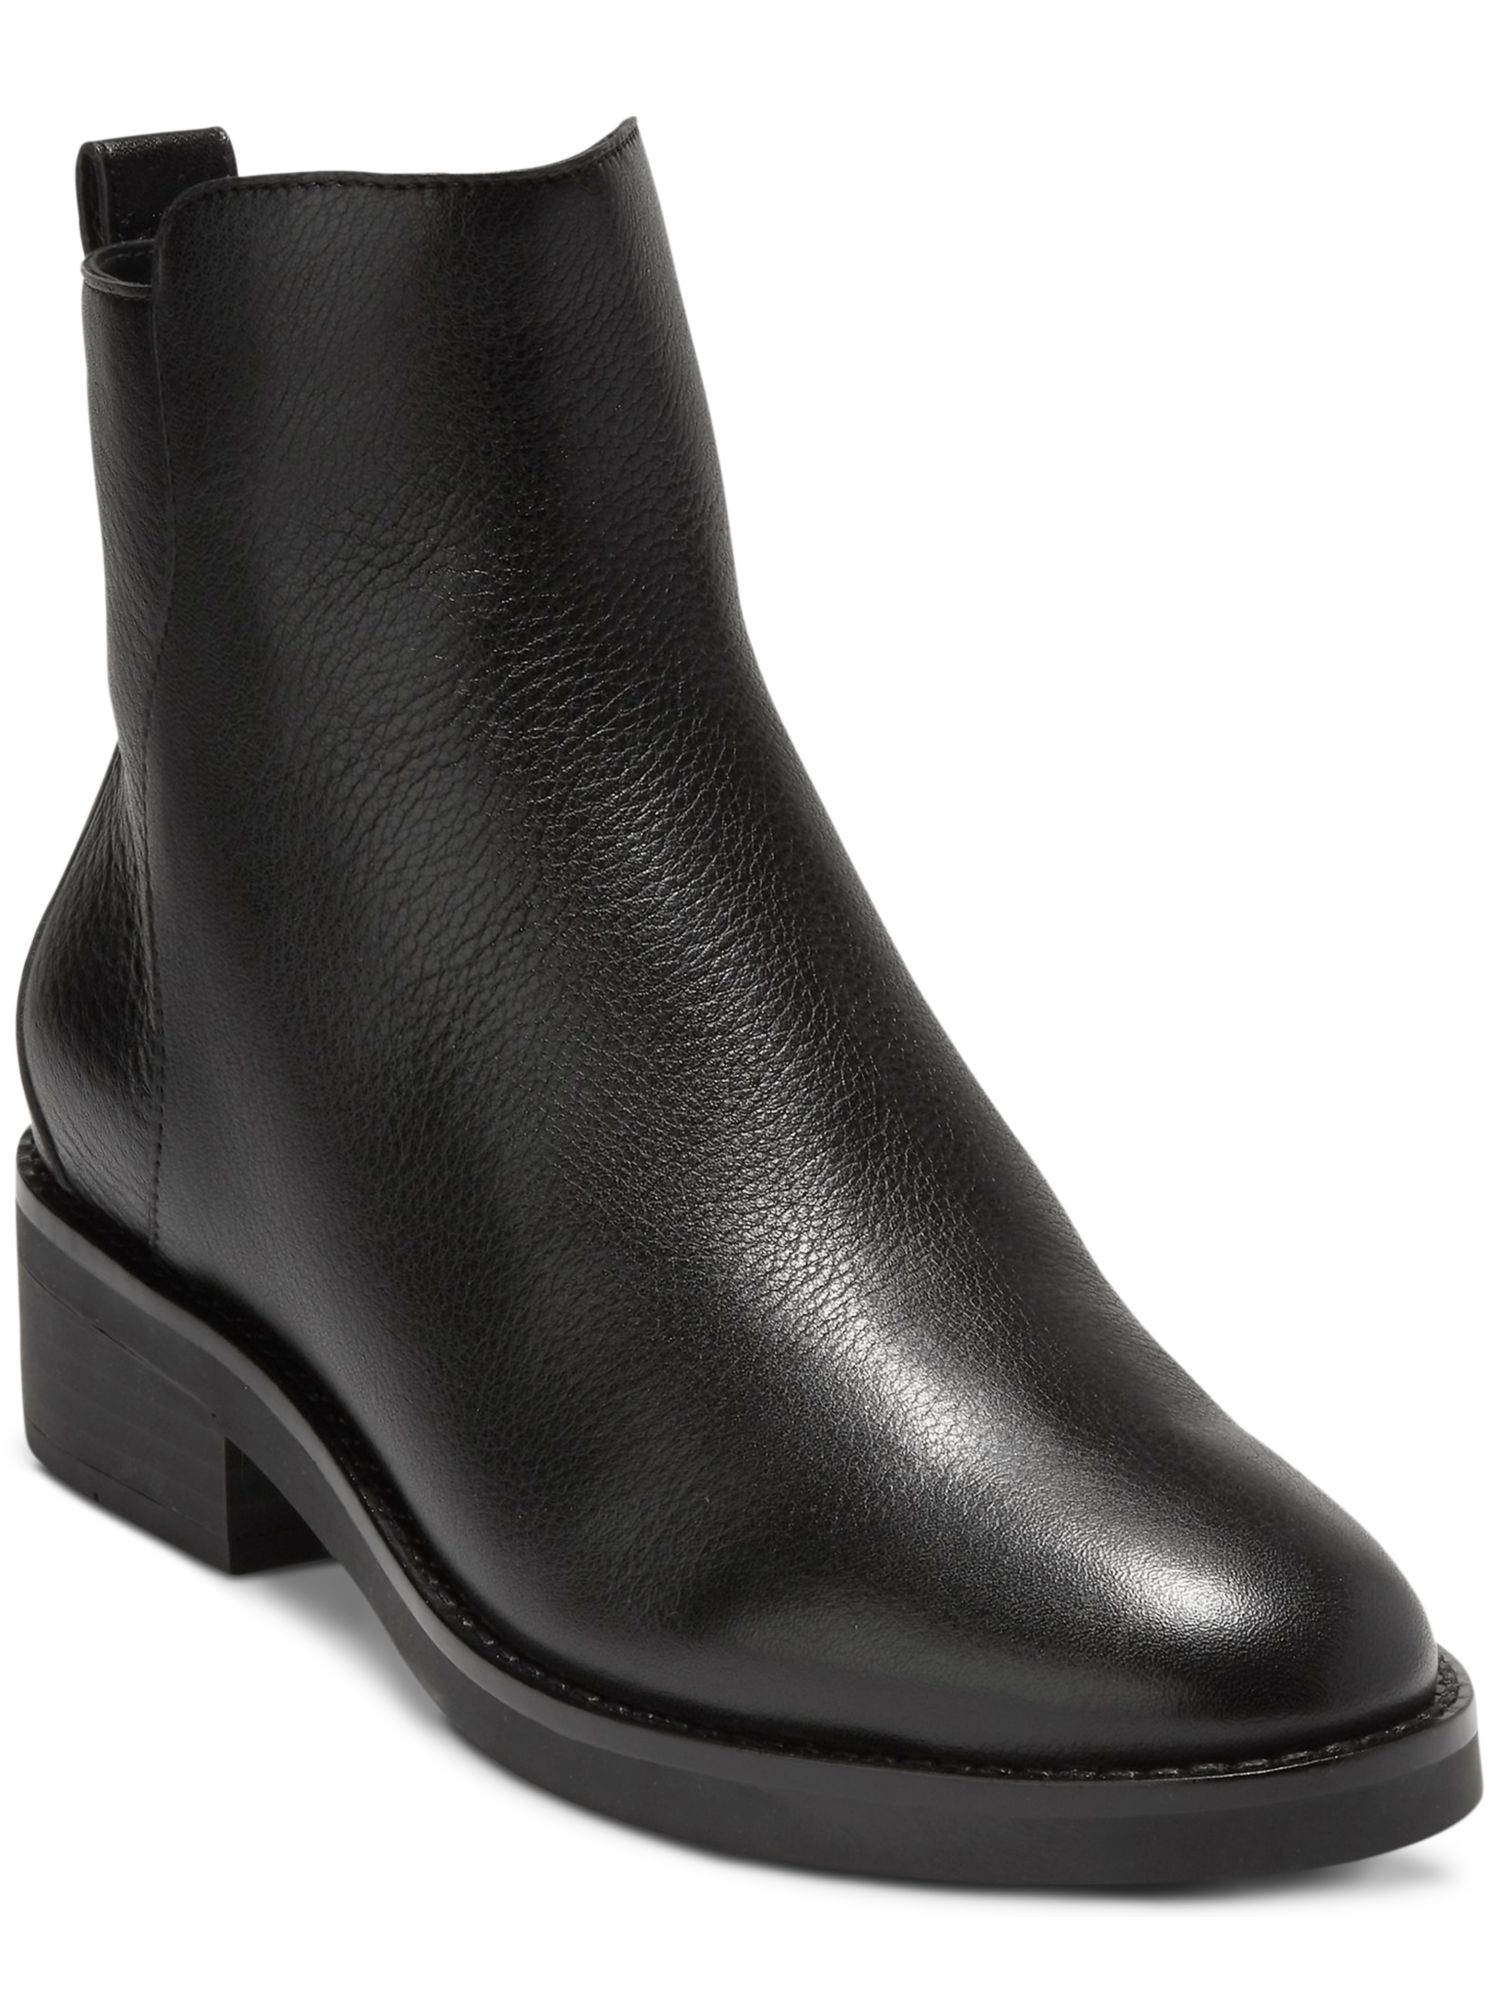 COLE HAAN Womens Black Padded River Almond Toe Block Heel Zip-Up Leather Booties 9.5 B